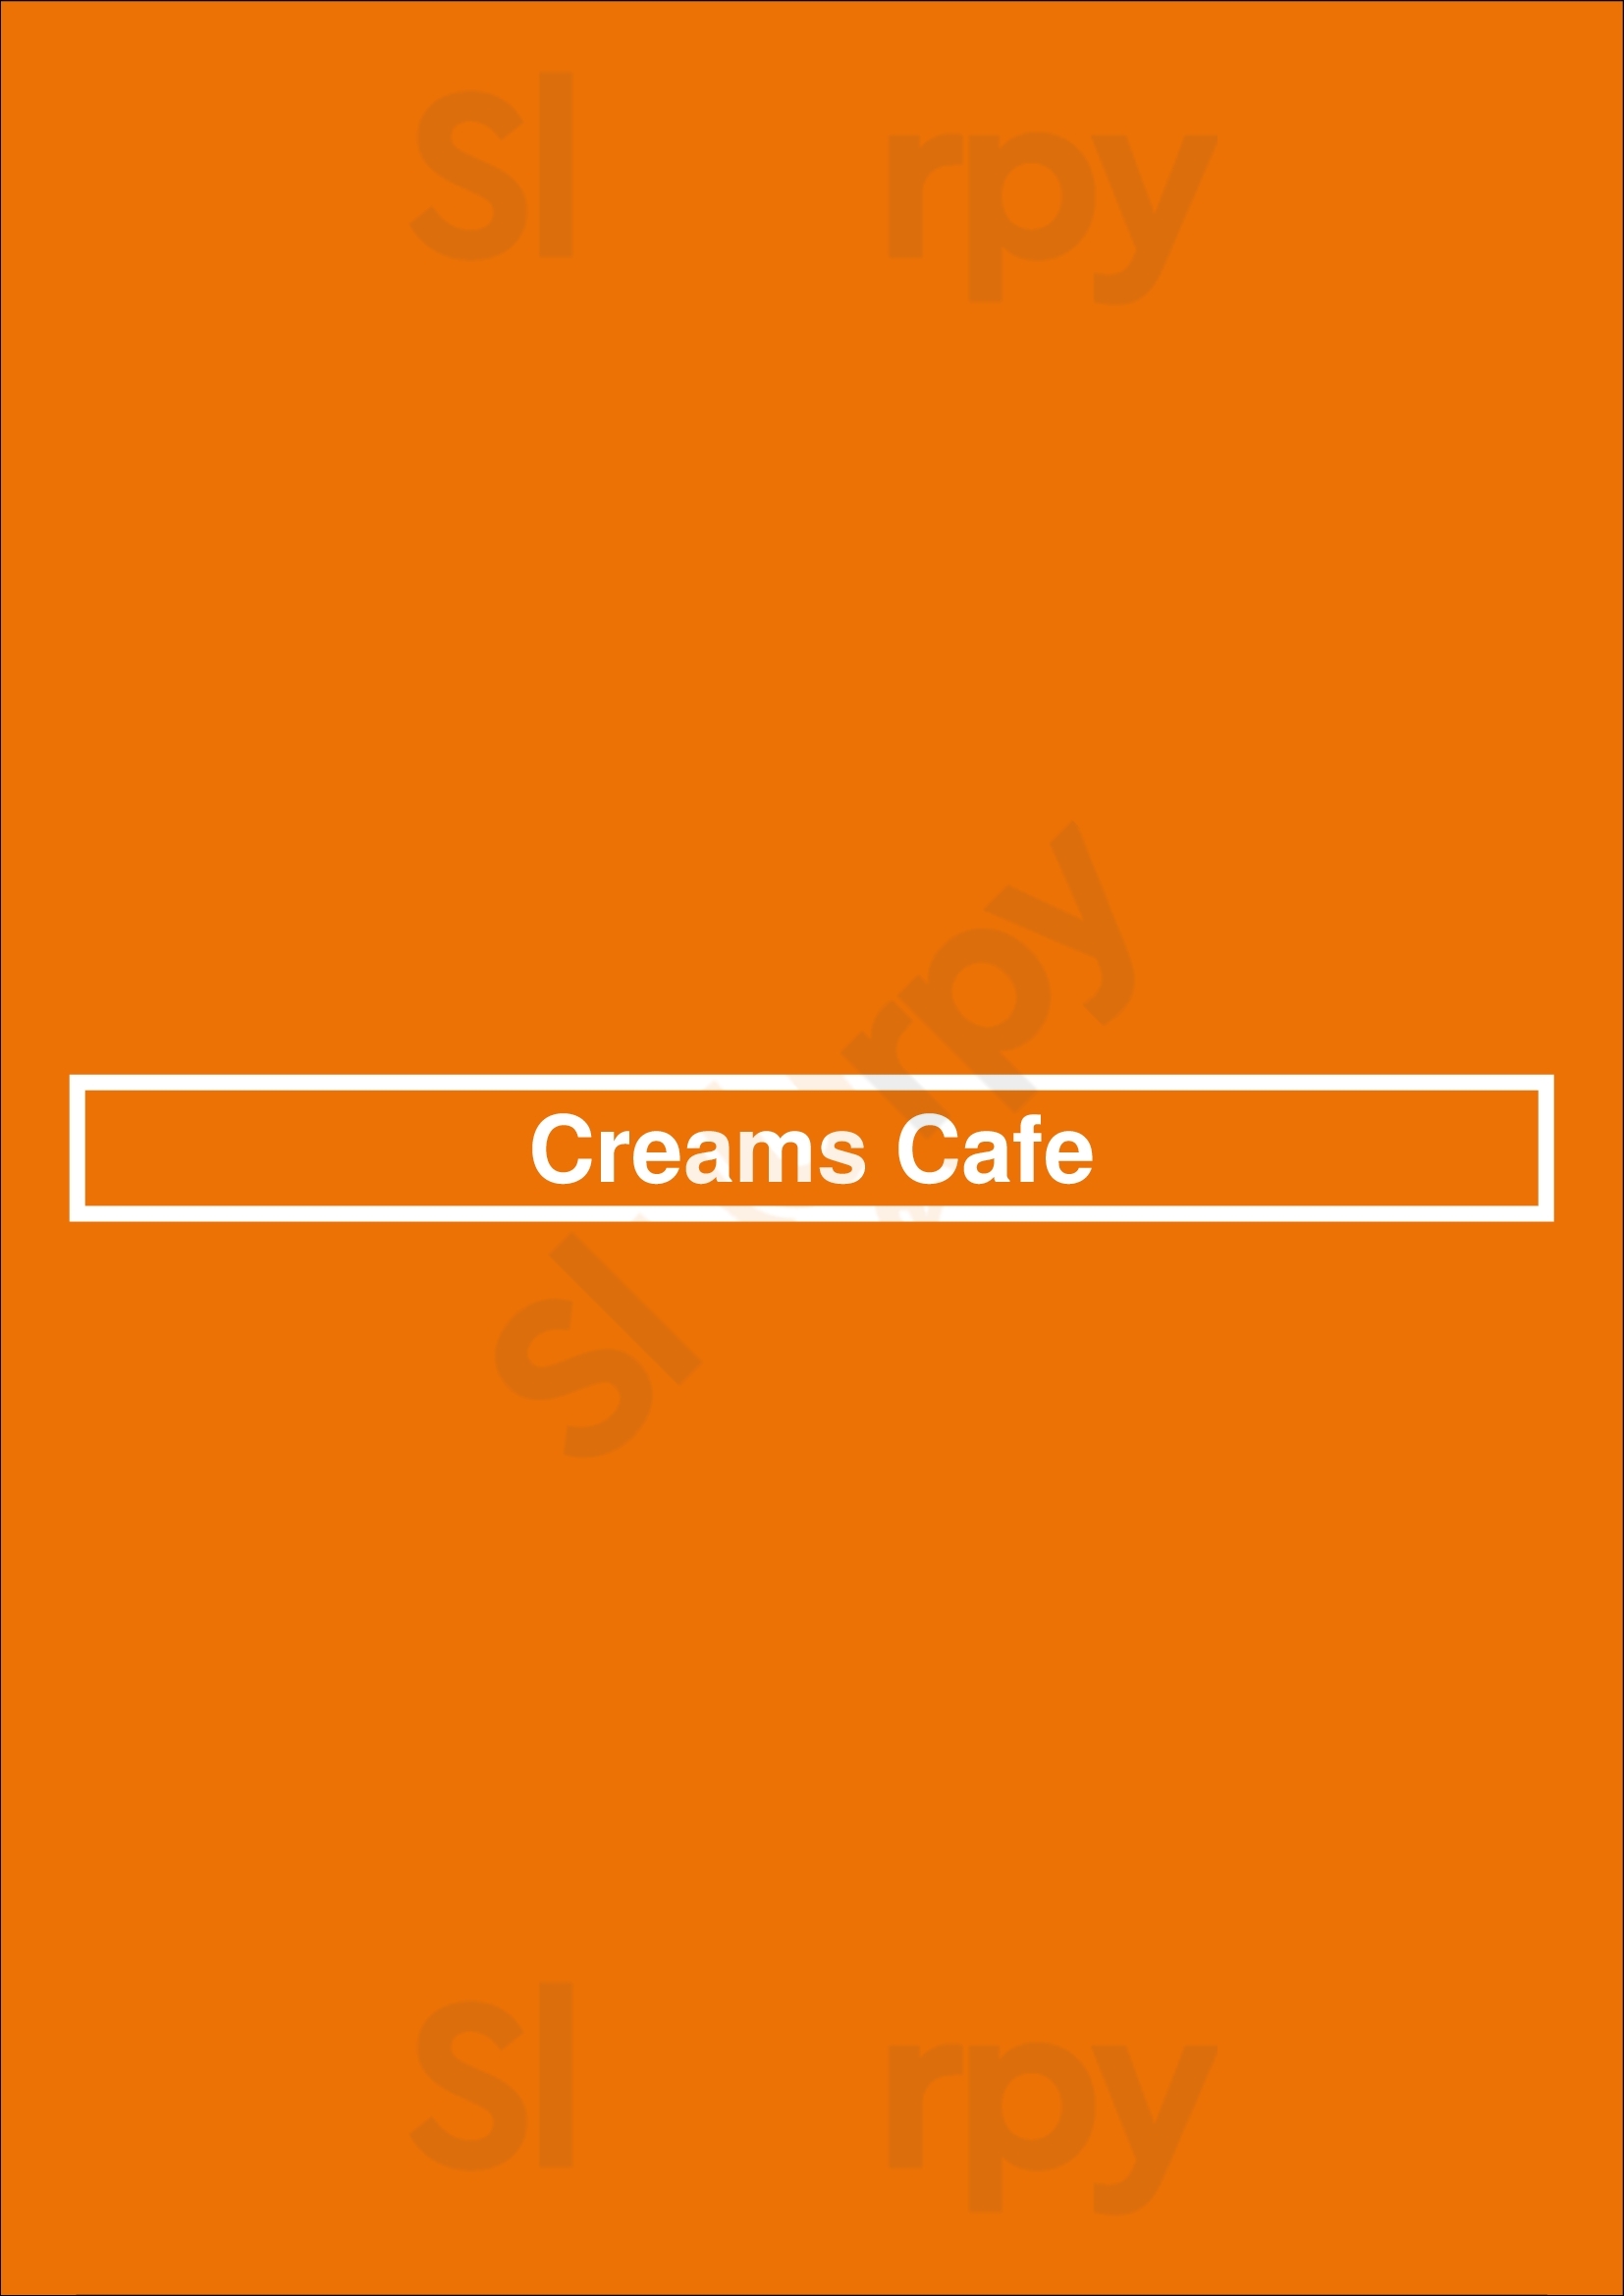 Creams Cafe Peterborough Menu - 1